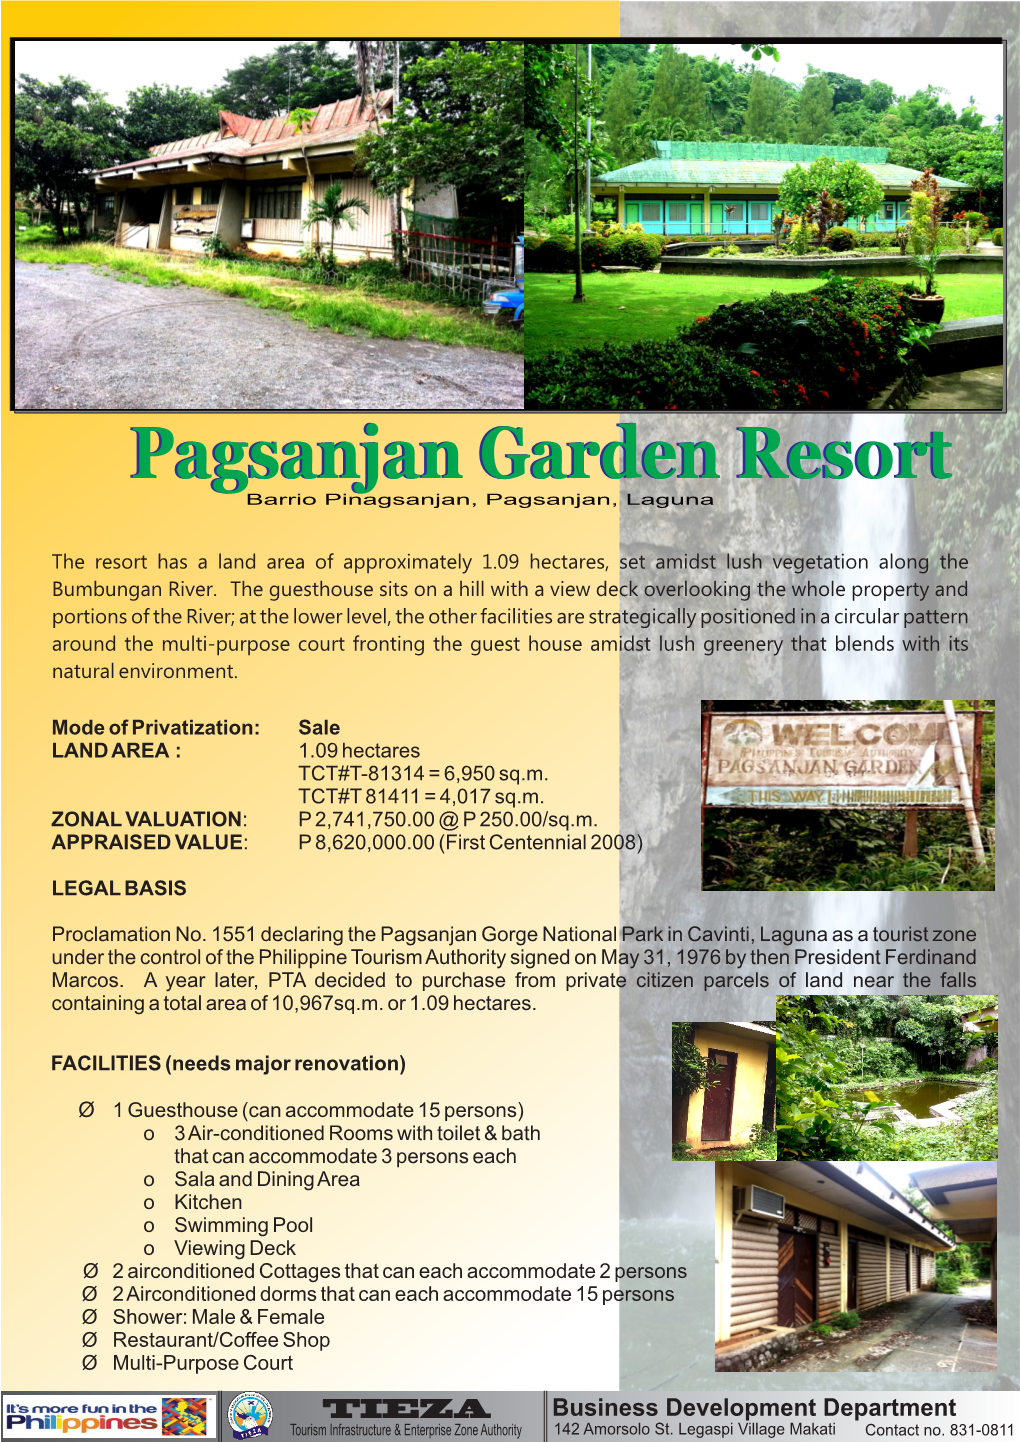 Pagsanjan Garden Resort